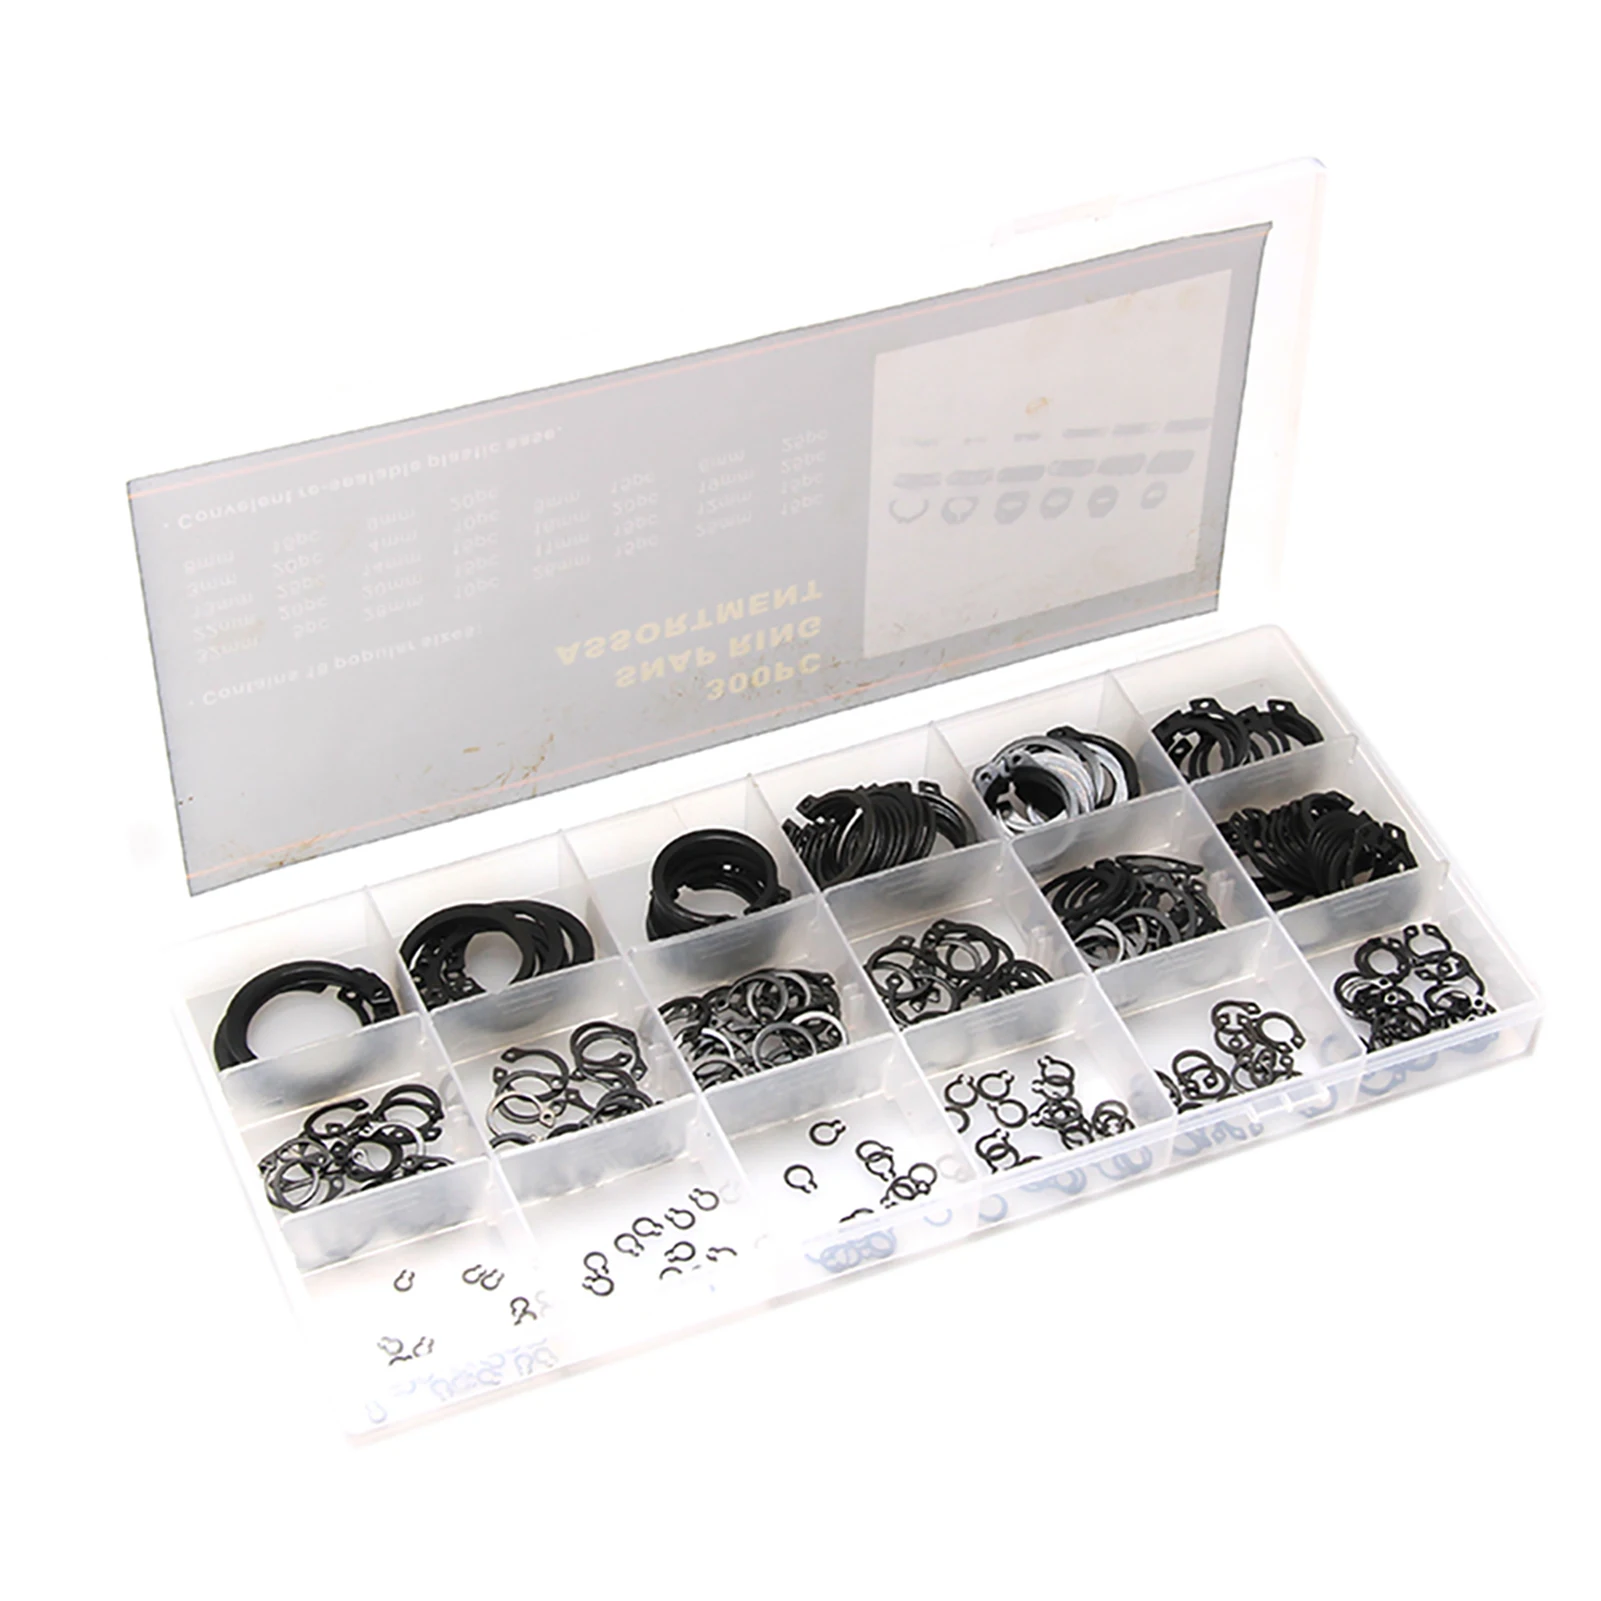 

300pcs Snap Ring External Circlip Assortment Kit Set with Storage Box Poratble 300pcs Circlip